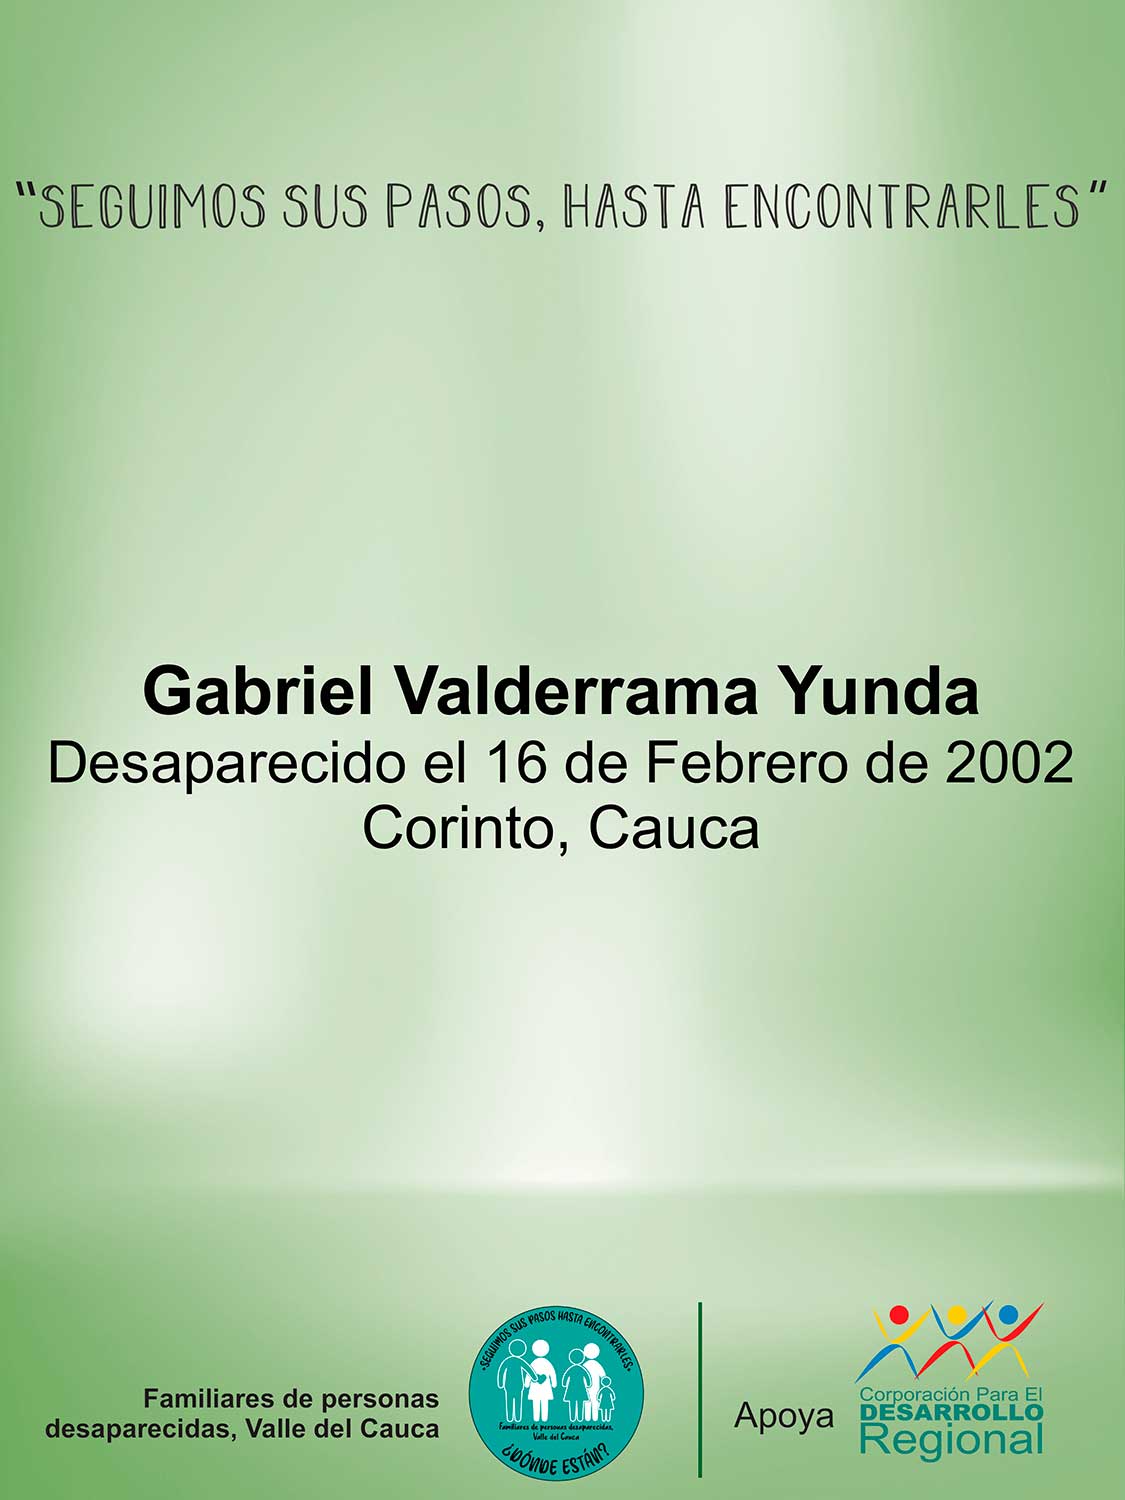 Gabriel Valderrama Yunda